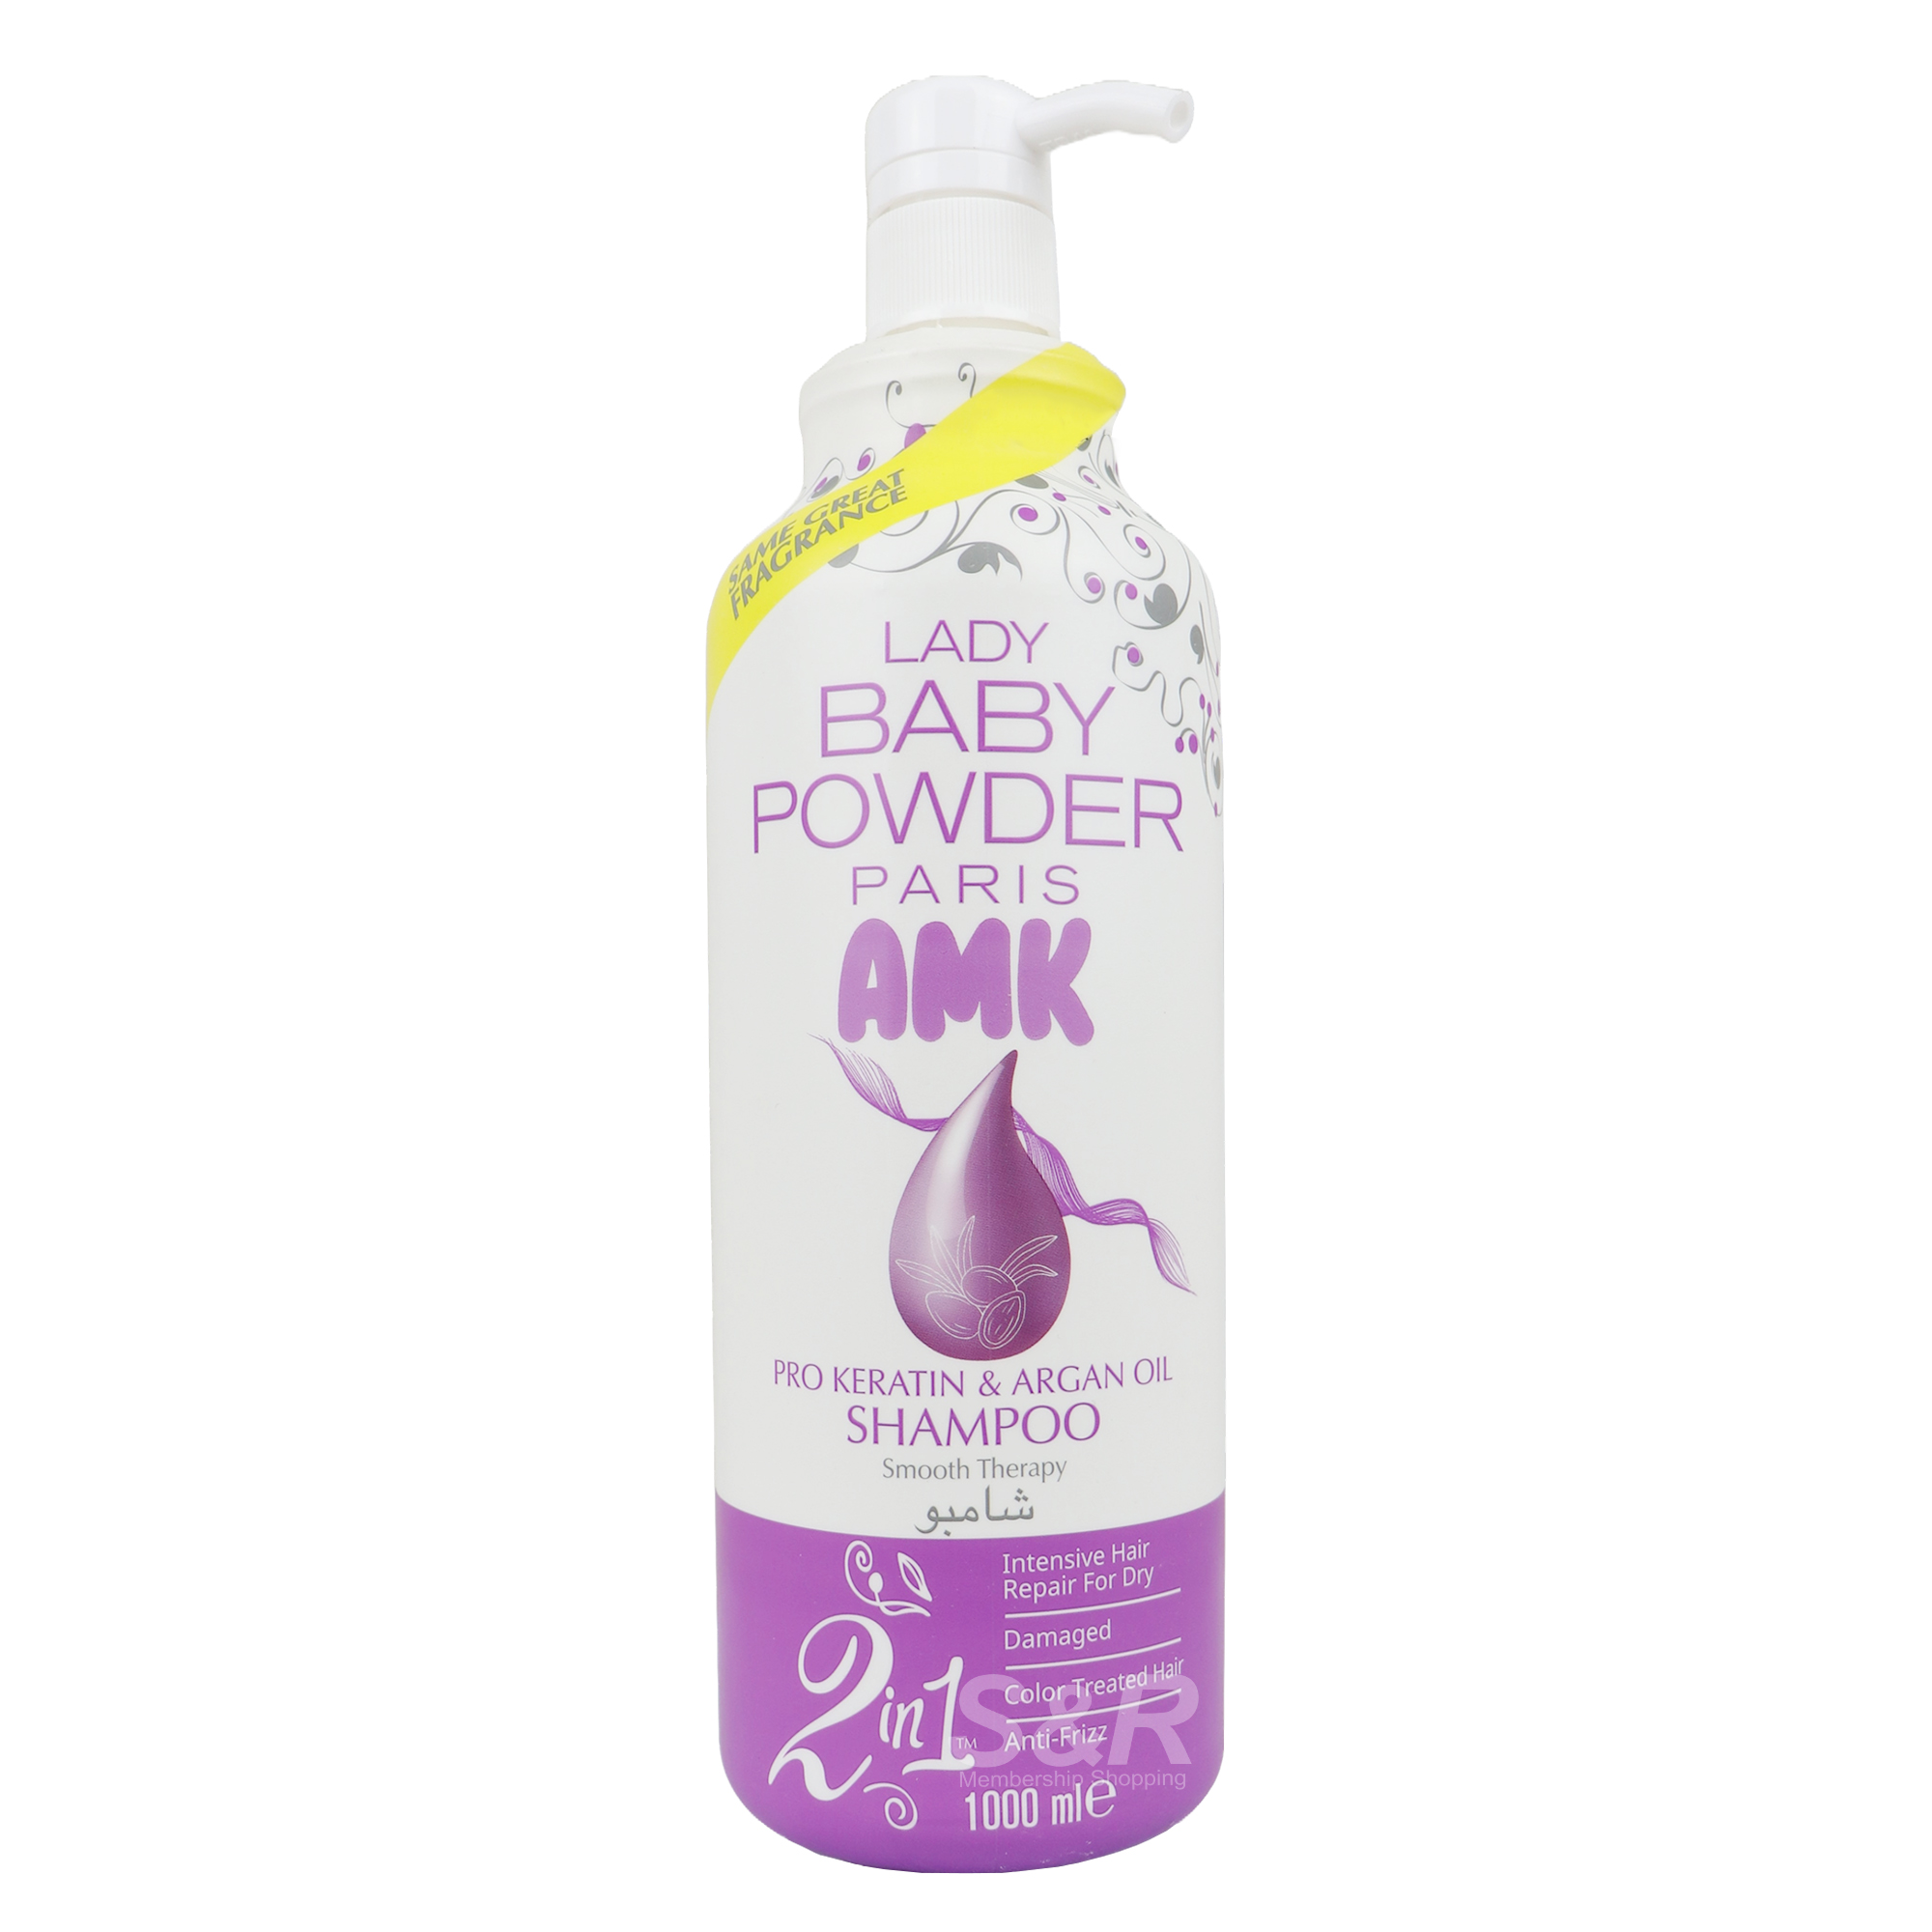 Lady Baby Powder Paris AMK Pro Keratin and Argan Oil Shampoo Purple 1L